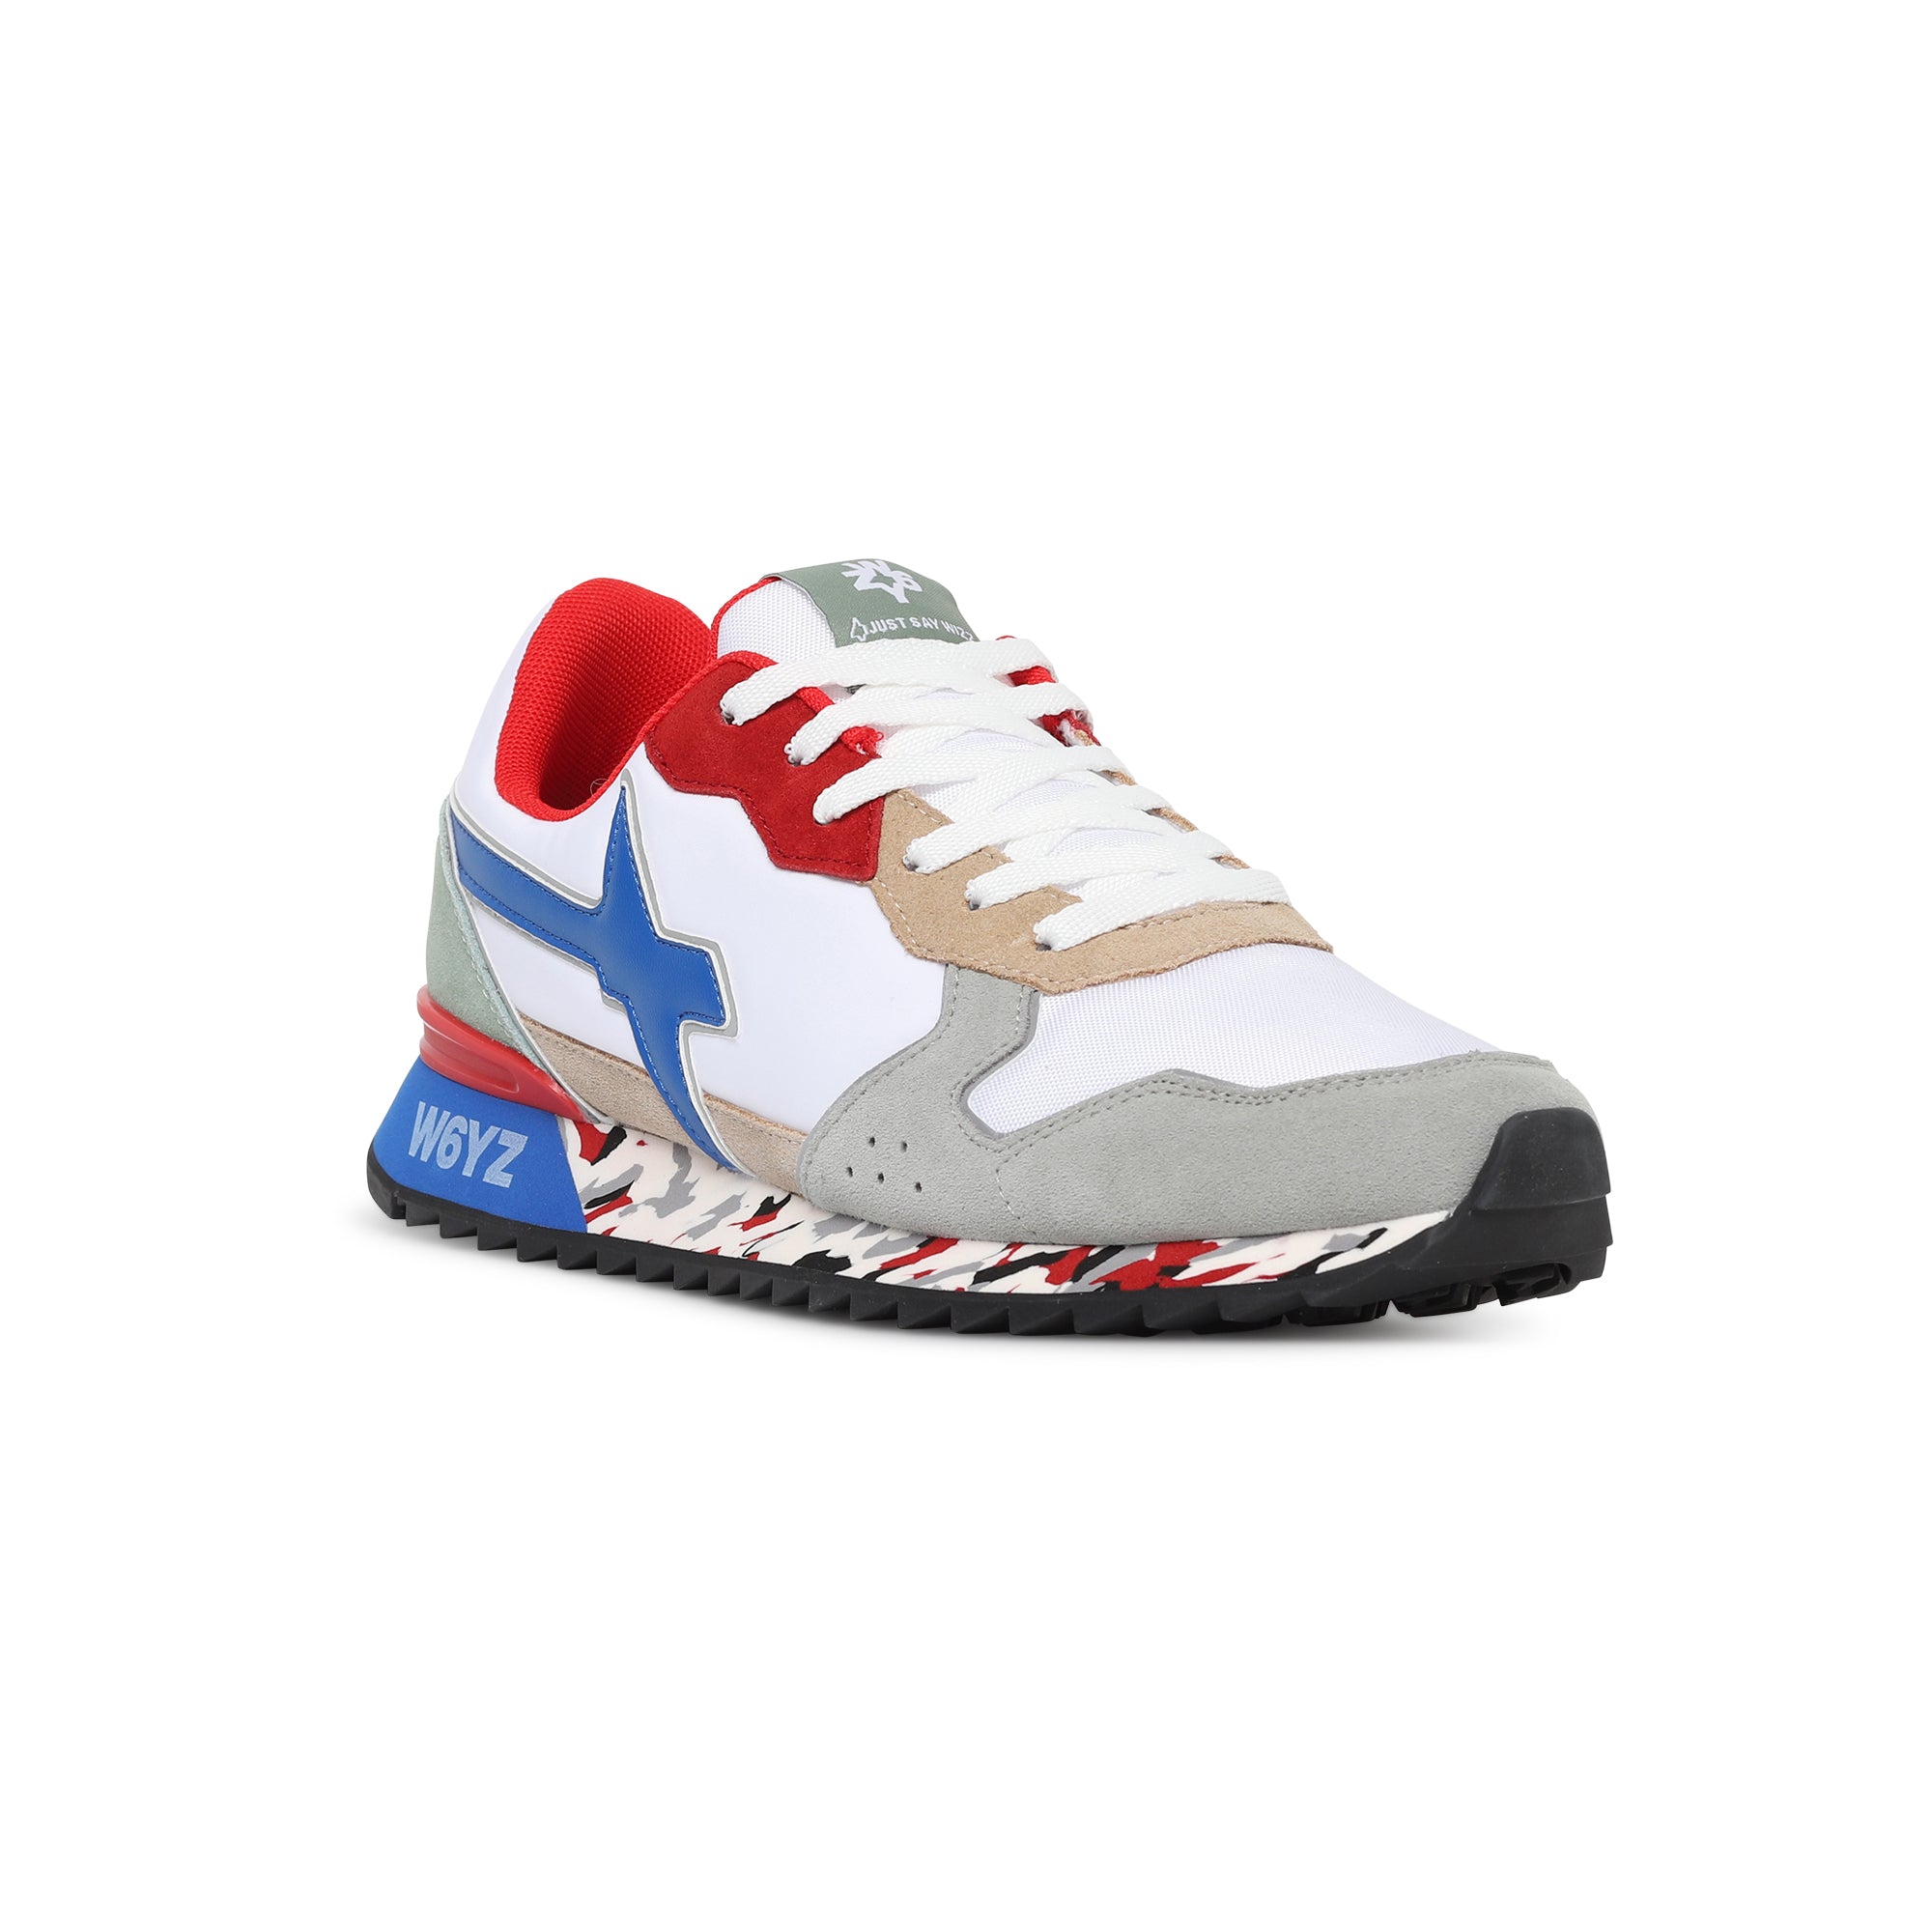 Sneaker w6yz  grey-white-azure-red uomo  - 2